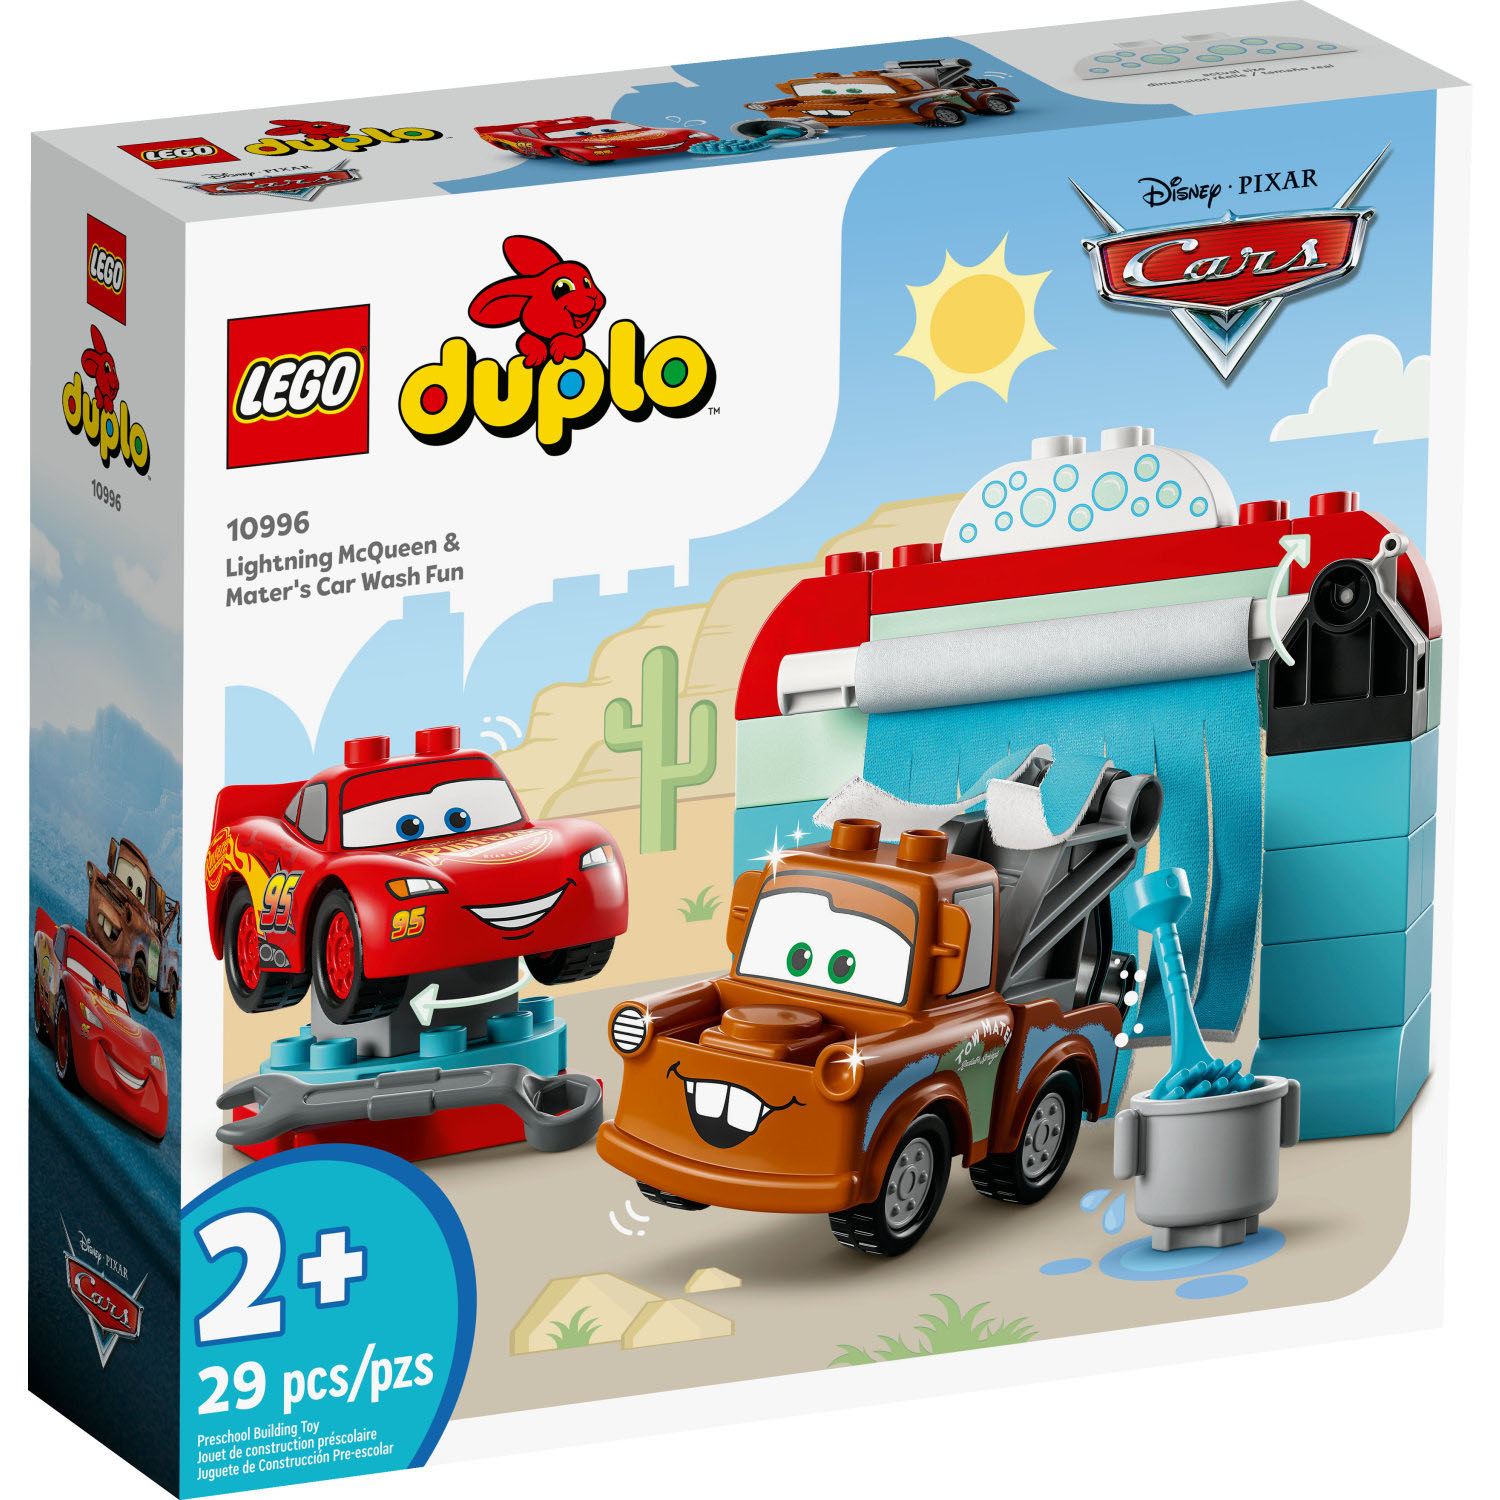 Grifo Cien años Buzo LEGO DUPLO Disney and Pixar's Cars Lightning McQueen & Mater's Car Wash Fun  10996 6426564 - Best Buy